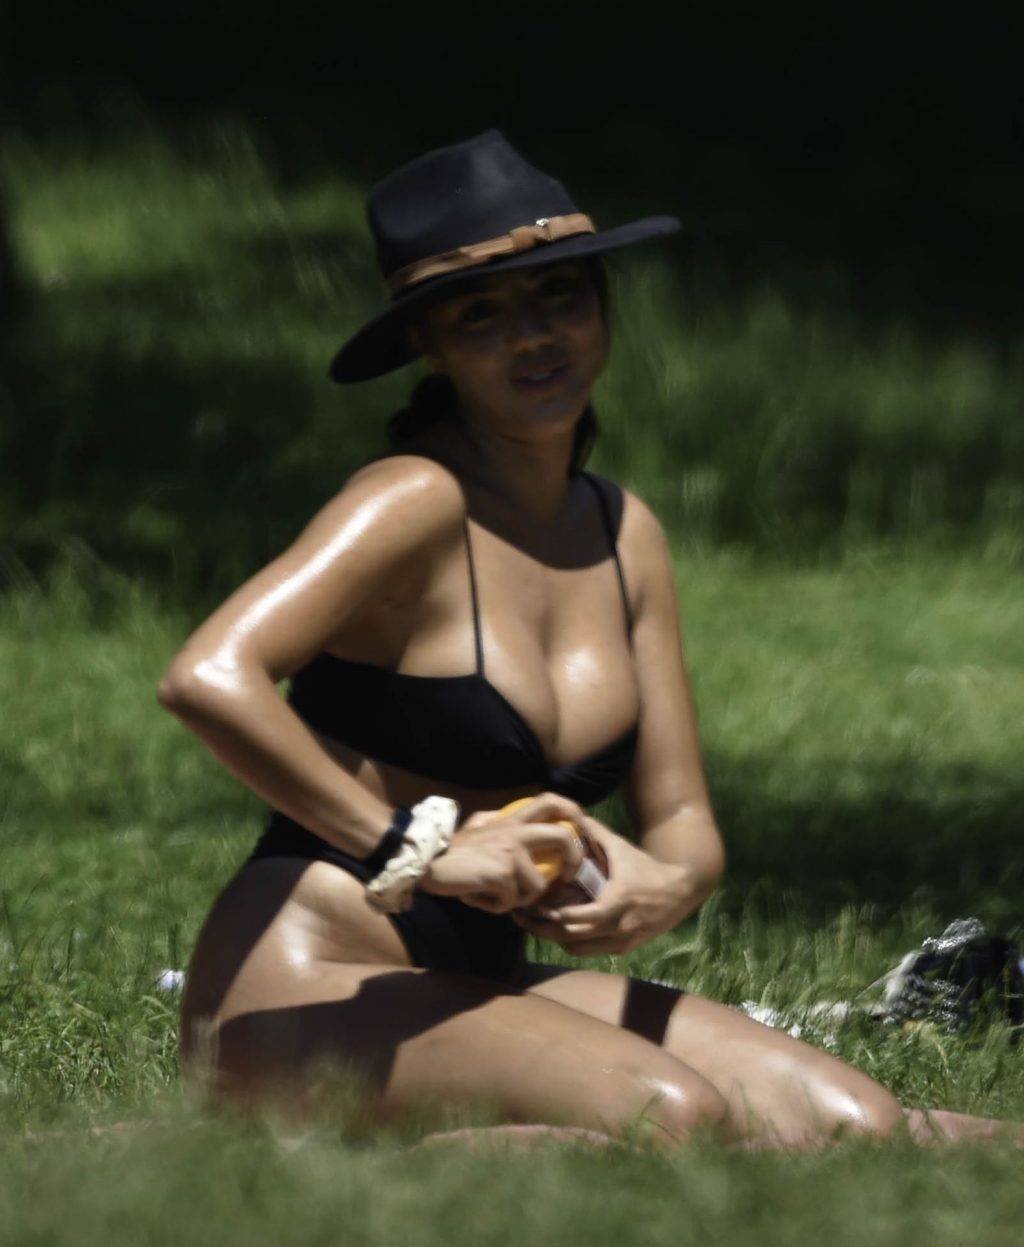 Arianna Ajtar Puts On Very Busty Display In a Black Bikini at Worsley Green (36 Photos)